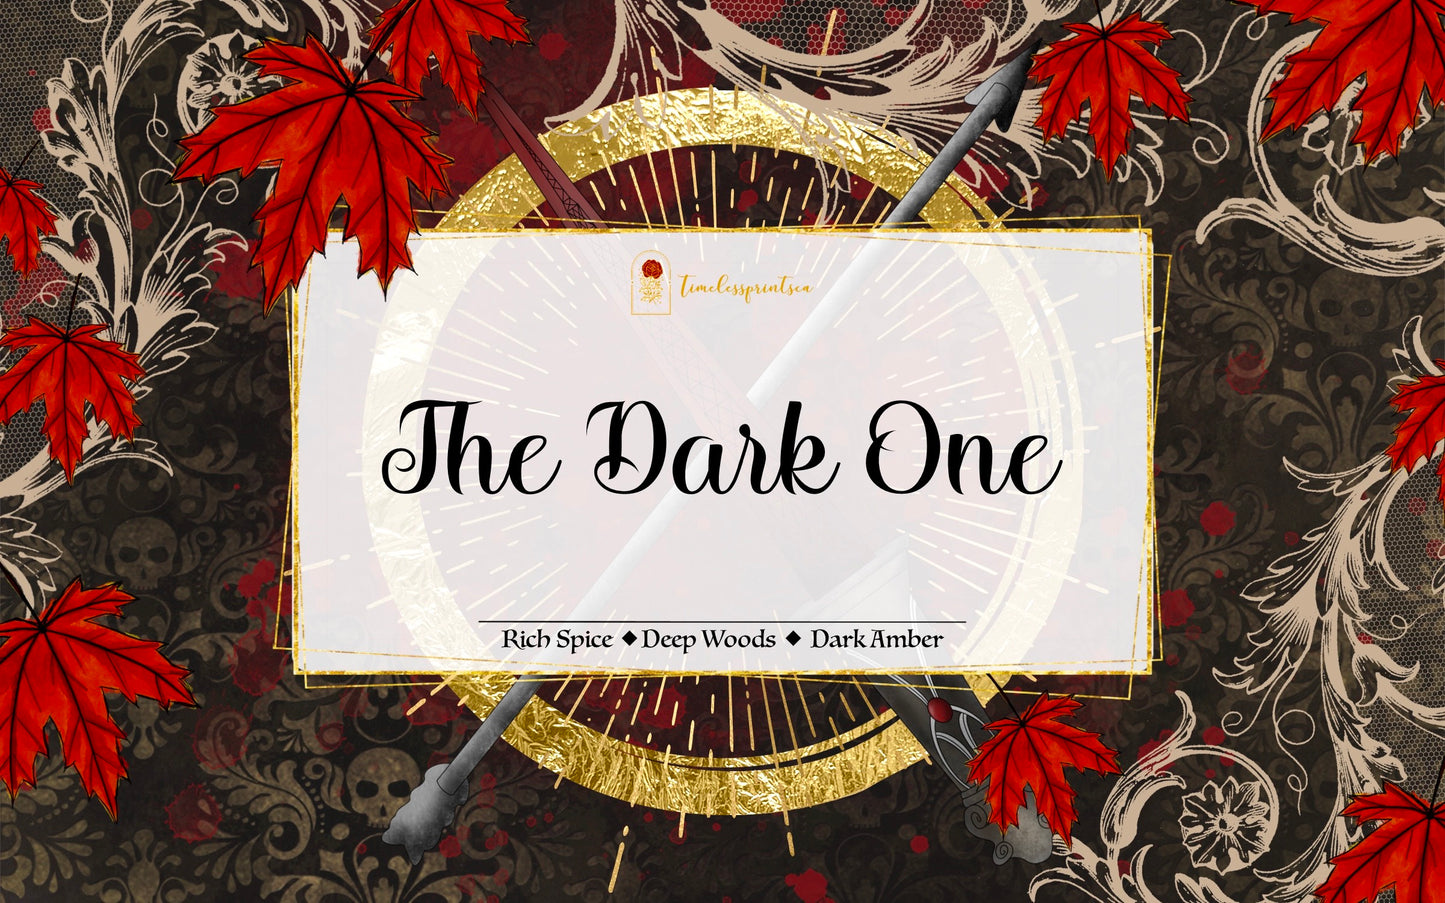 The Dark One